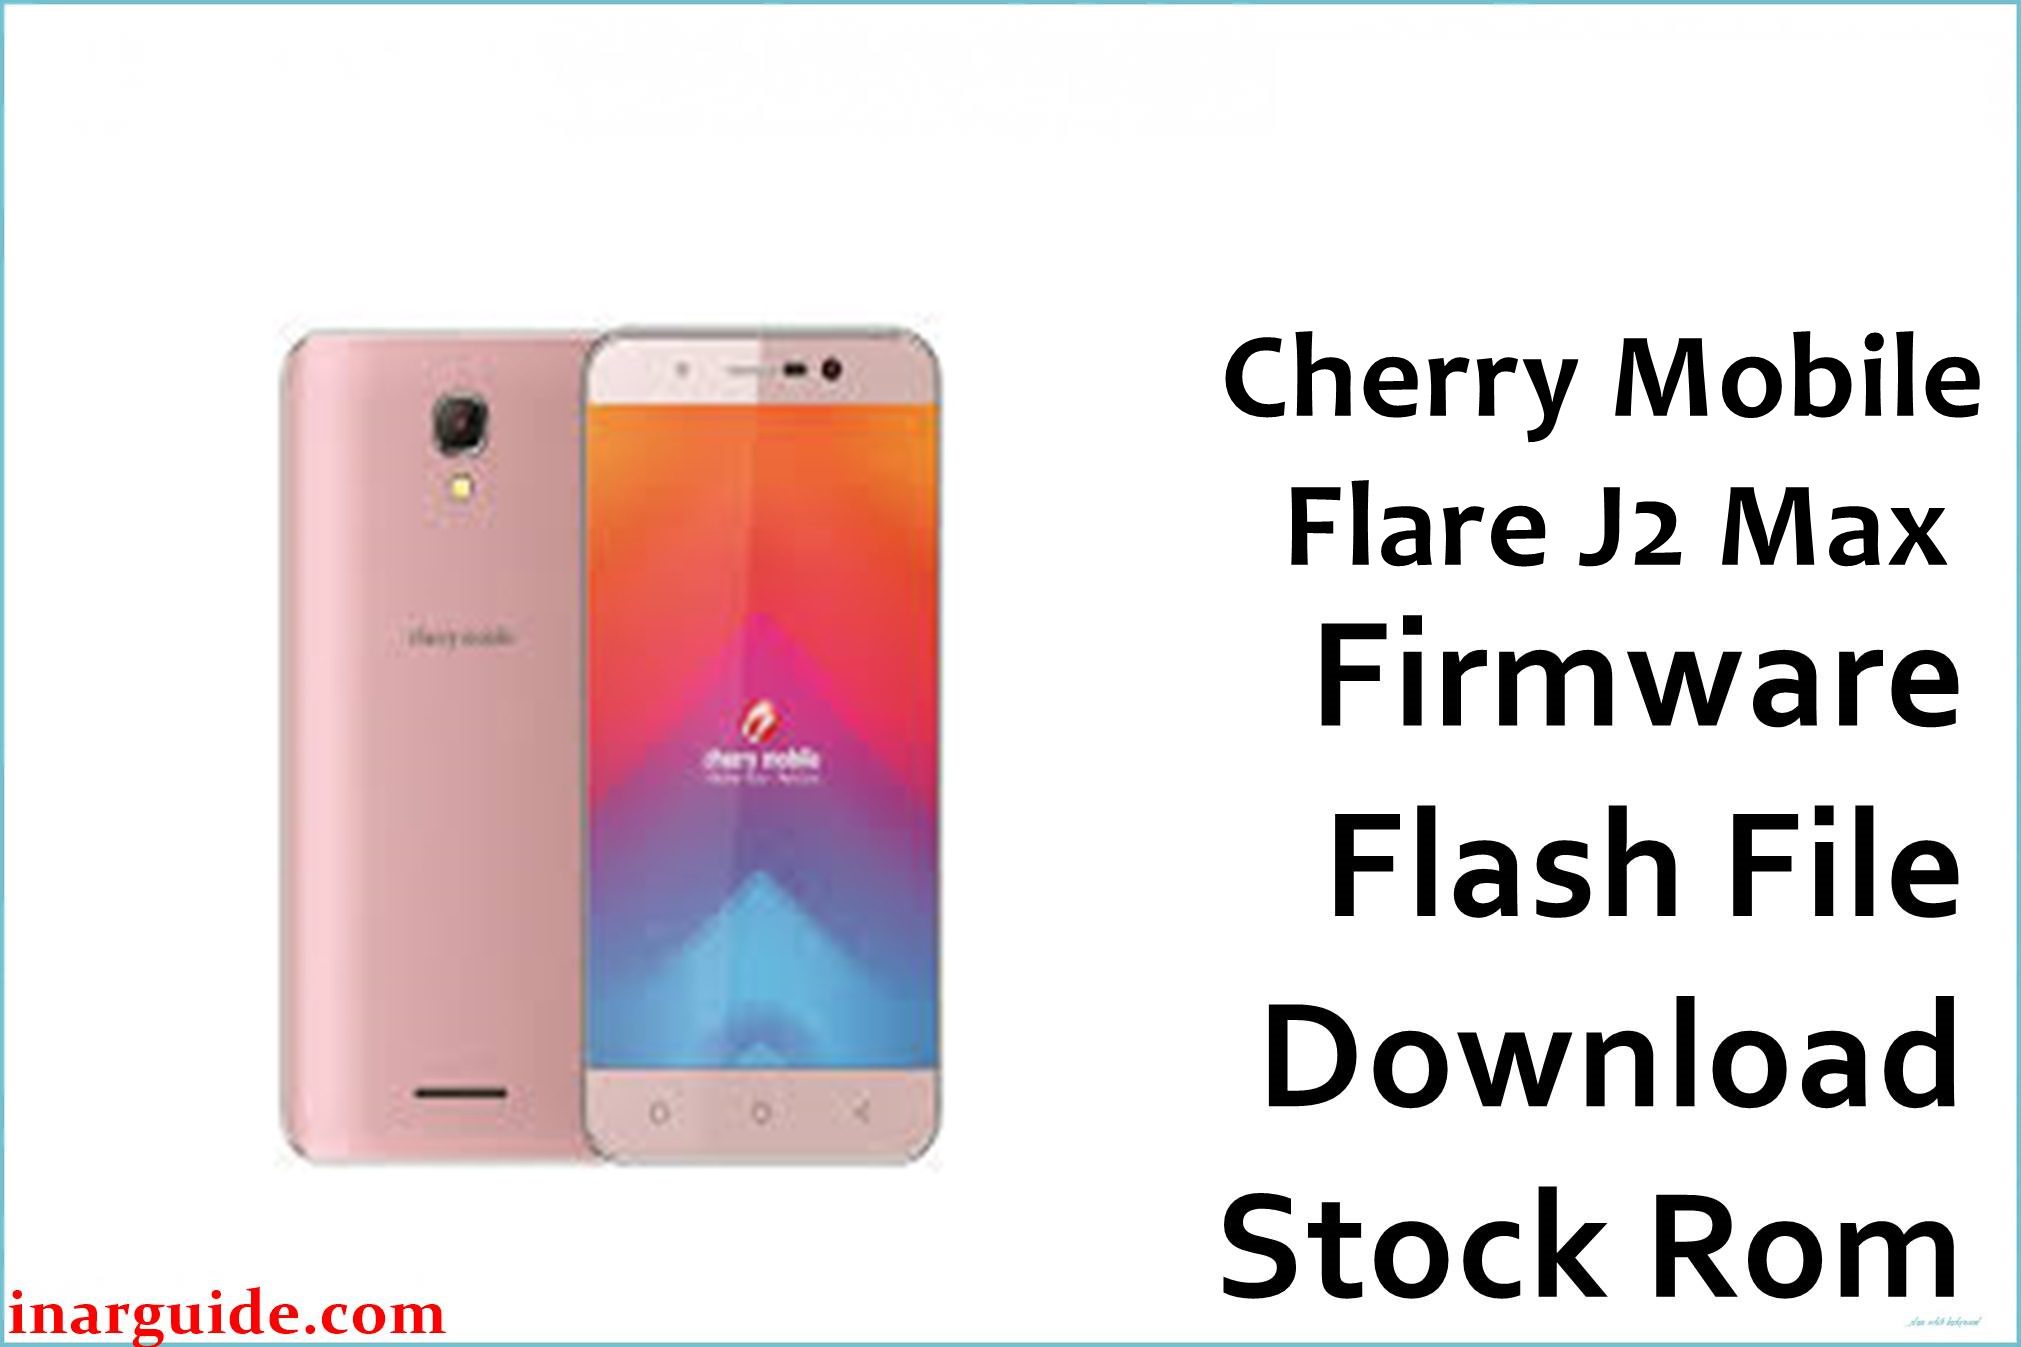 Cherry Mobile Flare J2 Max